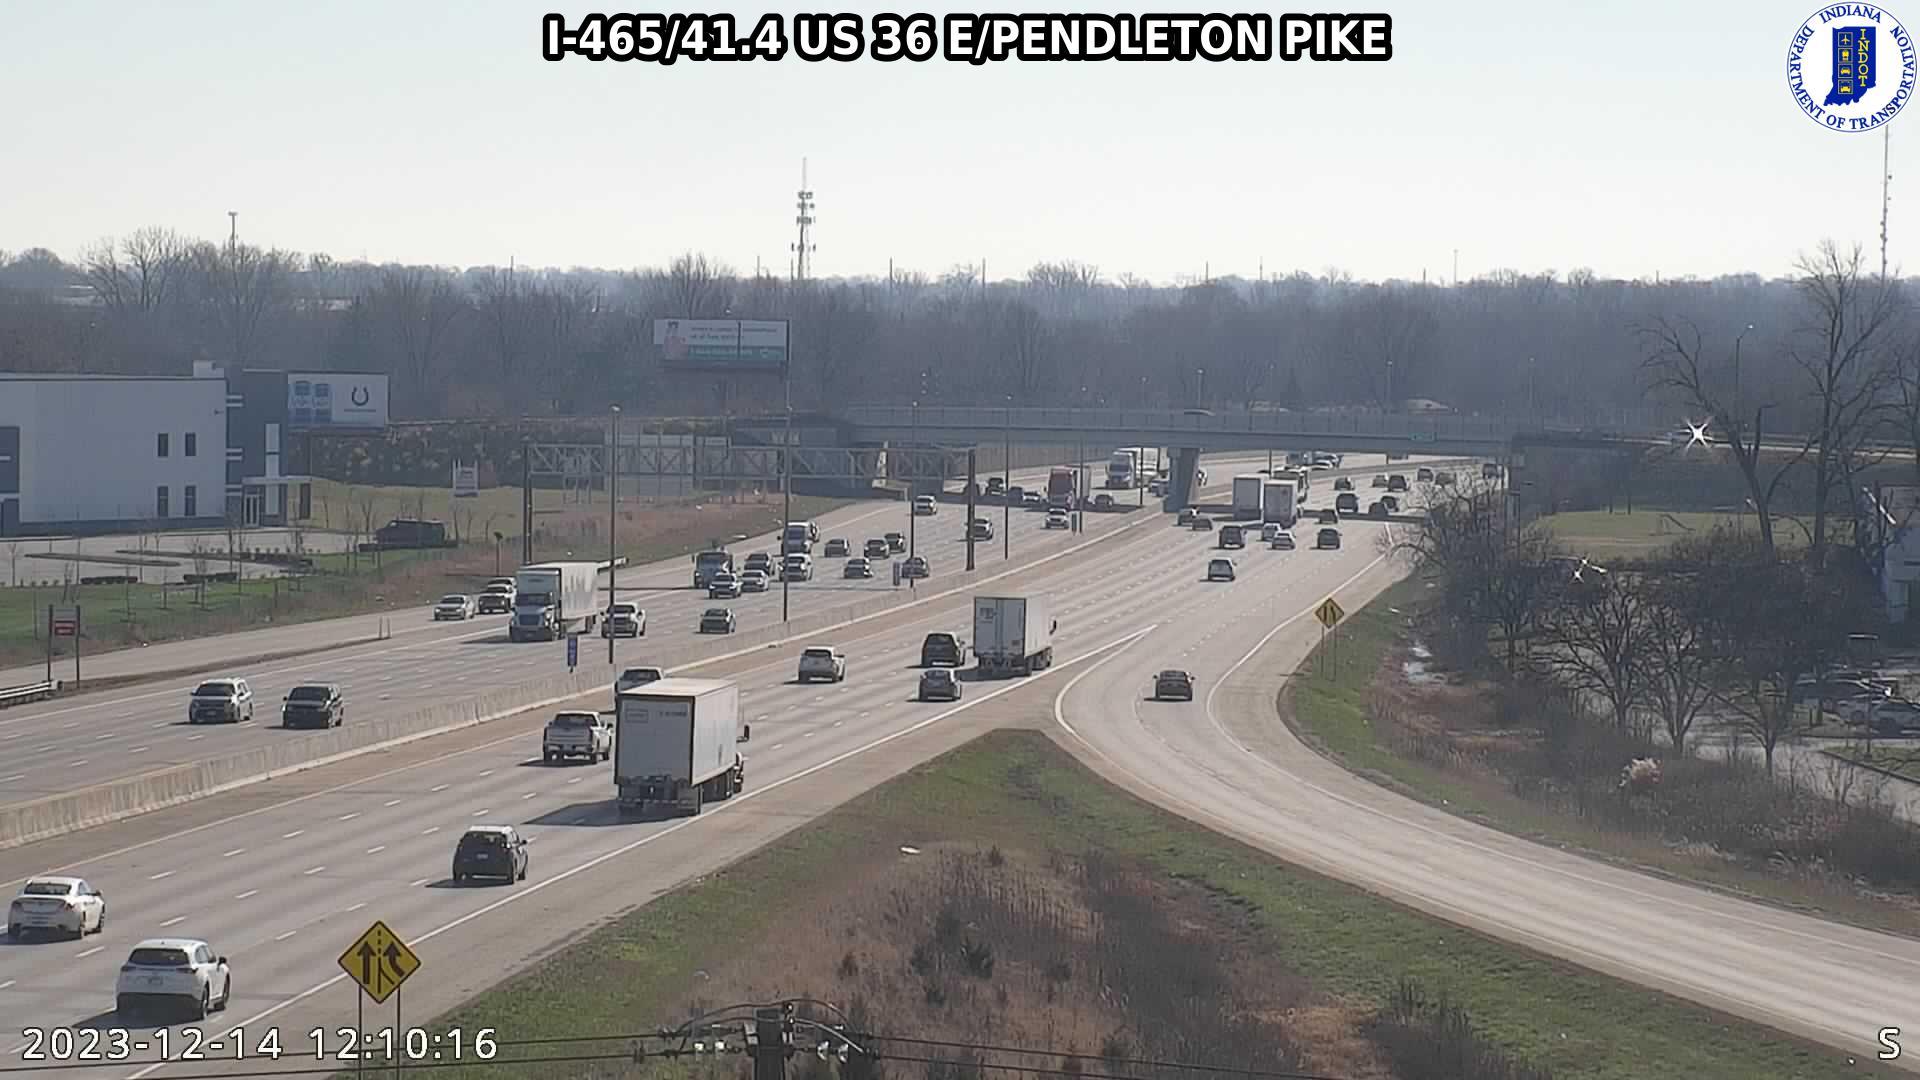 Traffic Cam Lawrence: I-465: I-465/41.4 US 36 E/PENDLETON PIKE Player